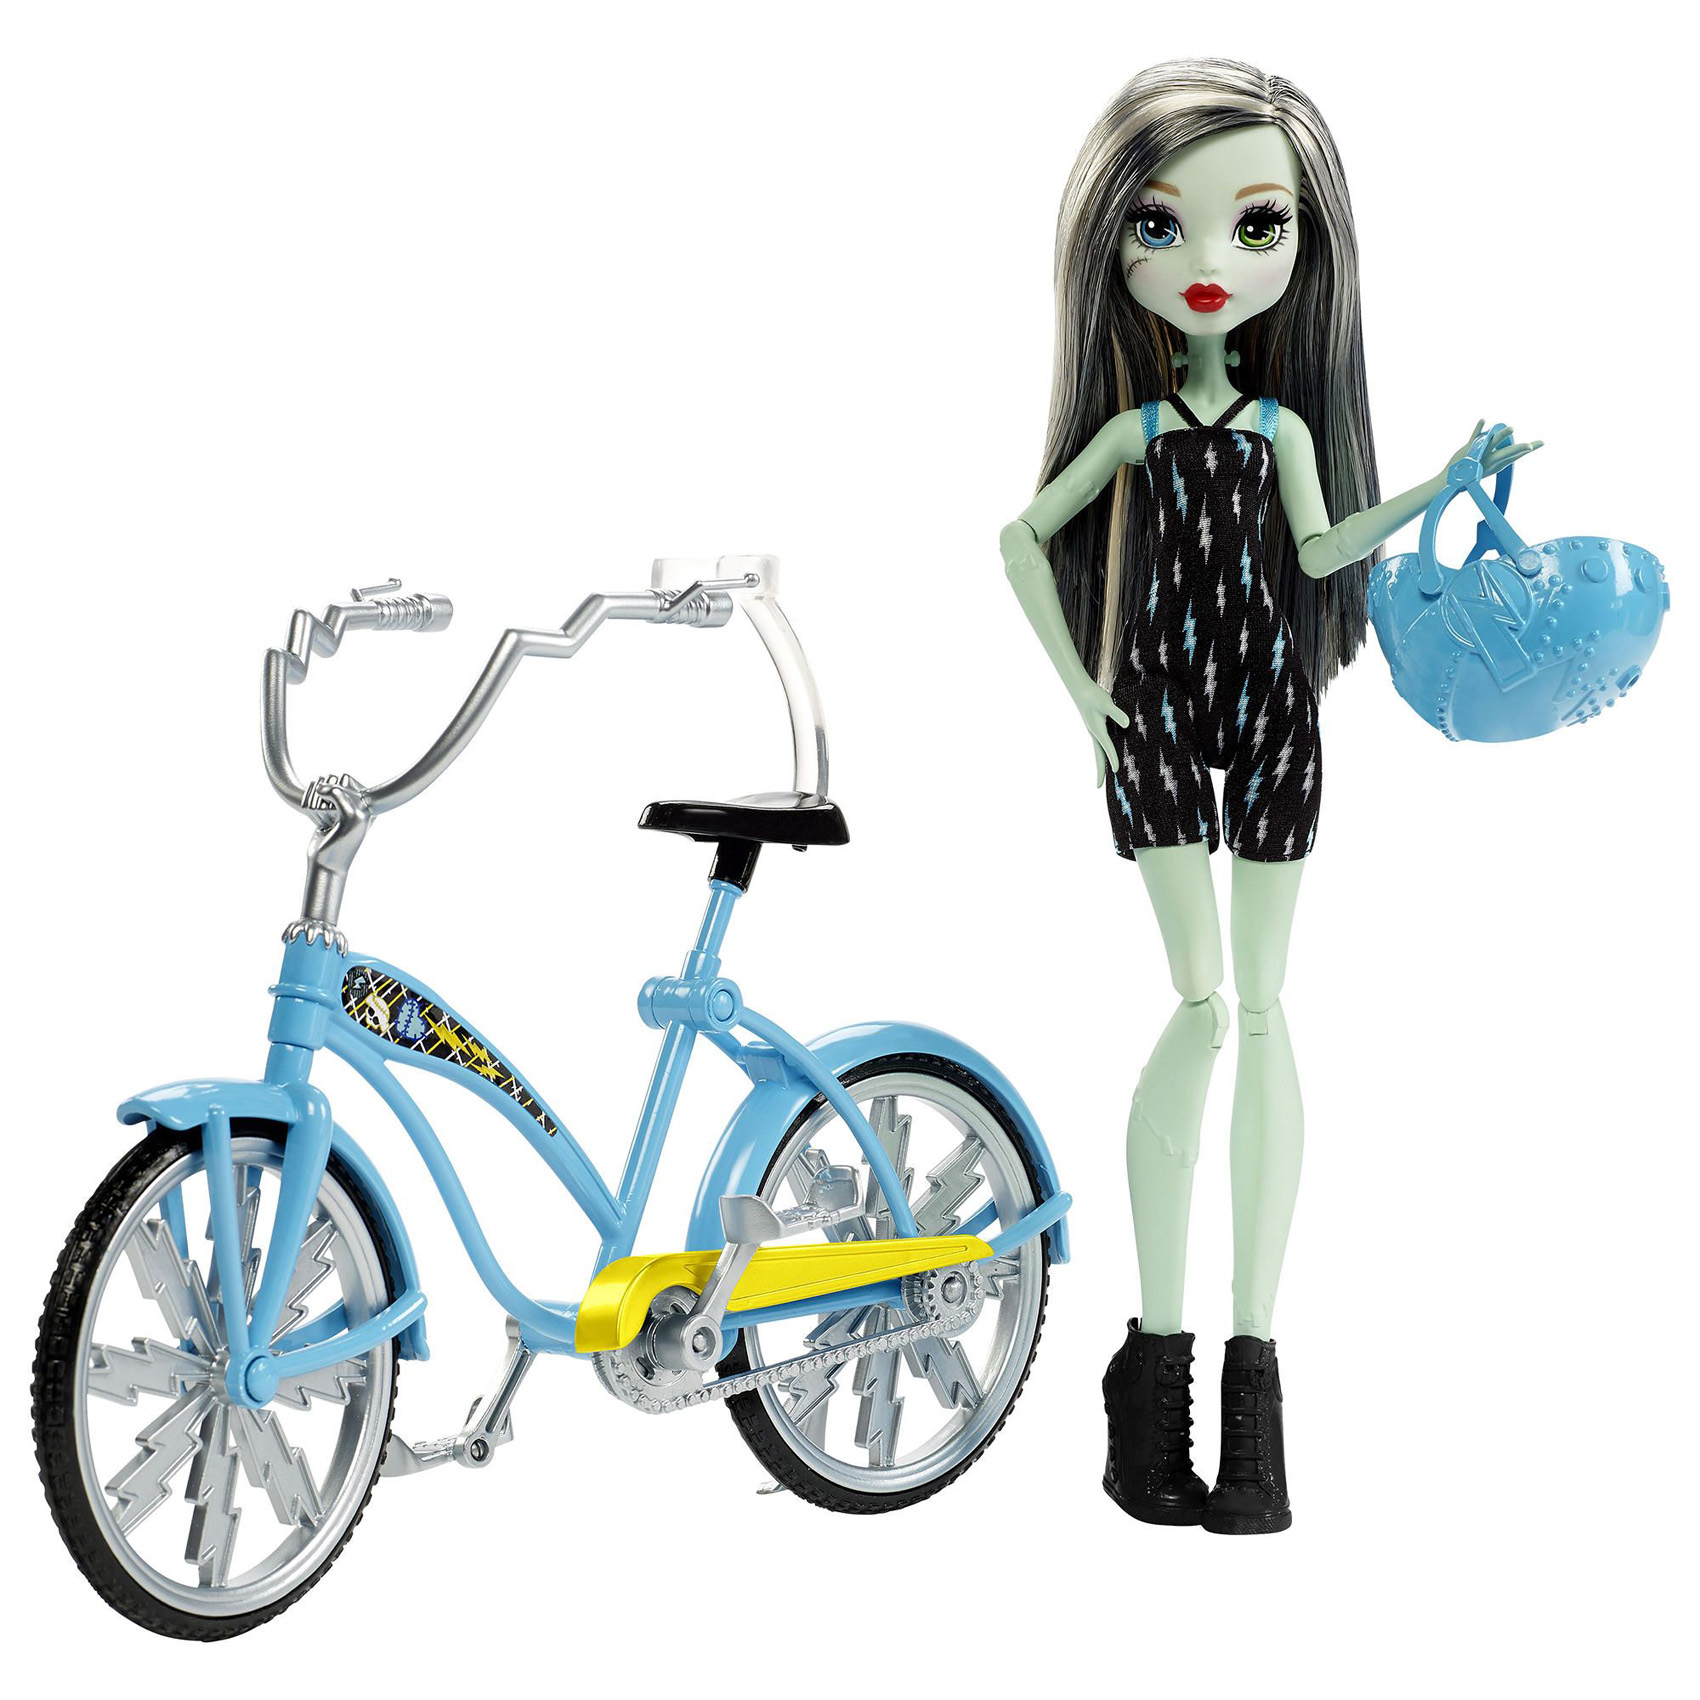 Сколько стоит фрэнки. Фрэнки Монстер Хай кукла. Фрэнки Штейн кукла. Monster High Frankie Stein кукла. Кукла Monster High Фрэнки Штейн на велосипеде, 26 см, dpx18.